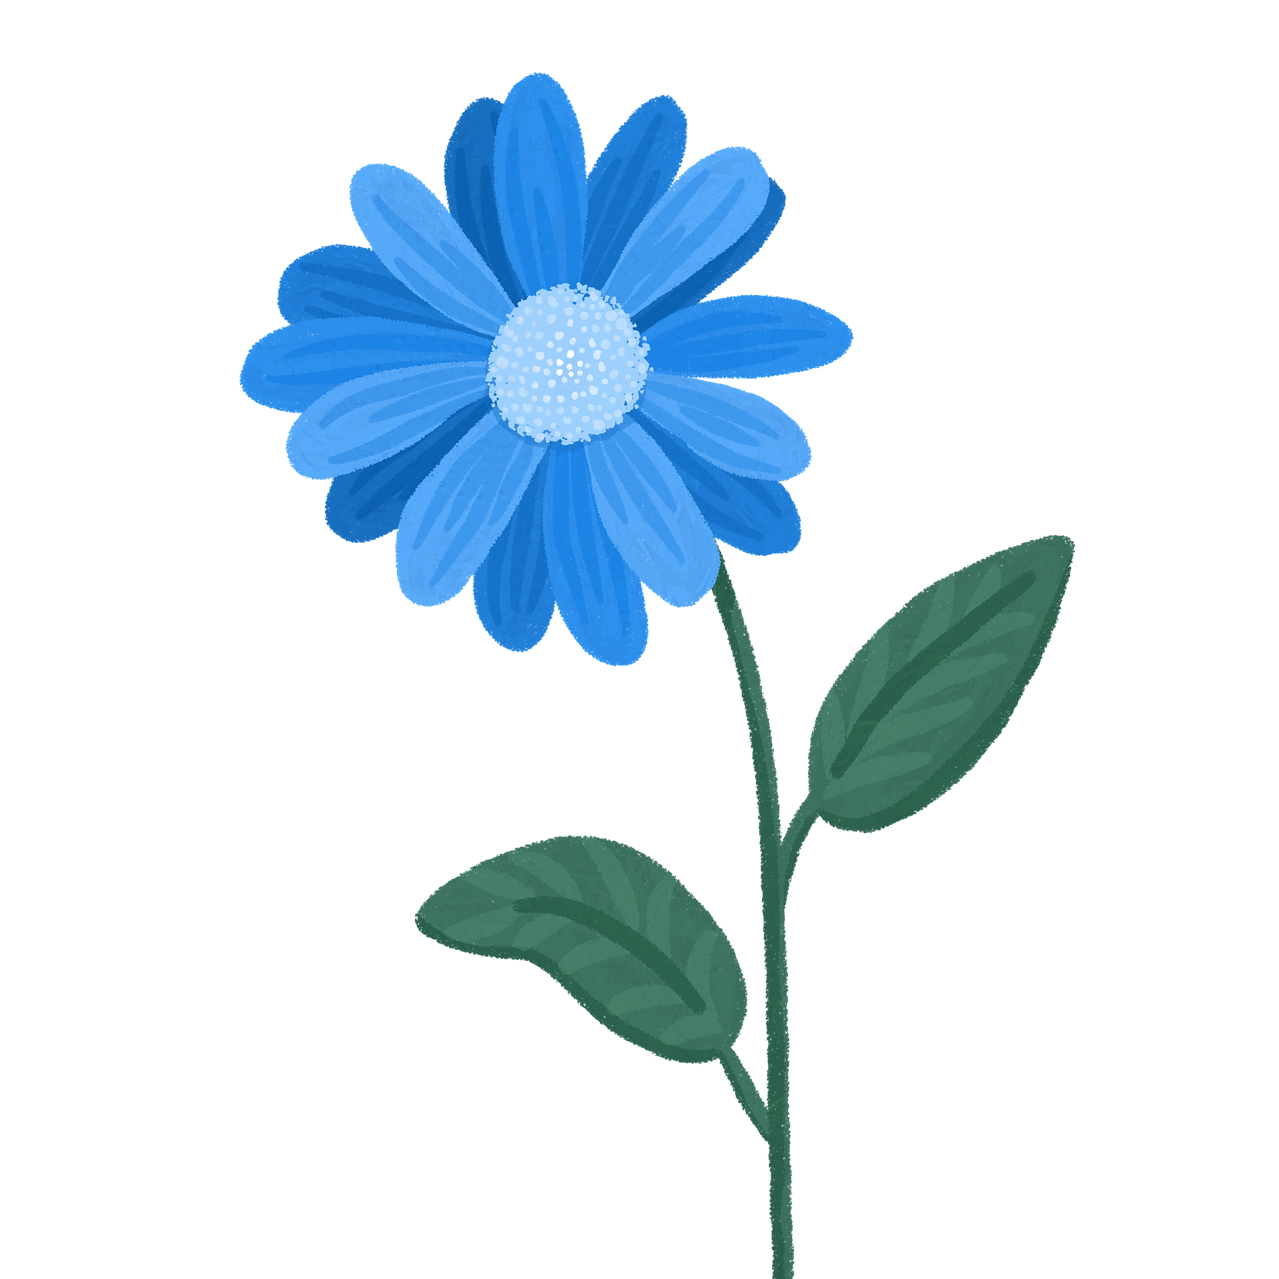 A Blue Flower as decoration.